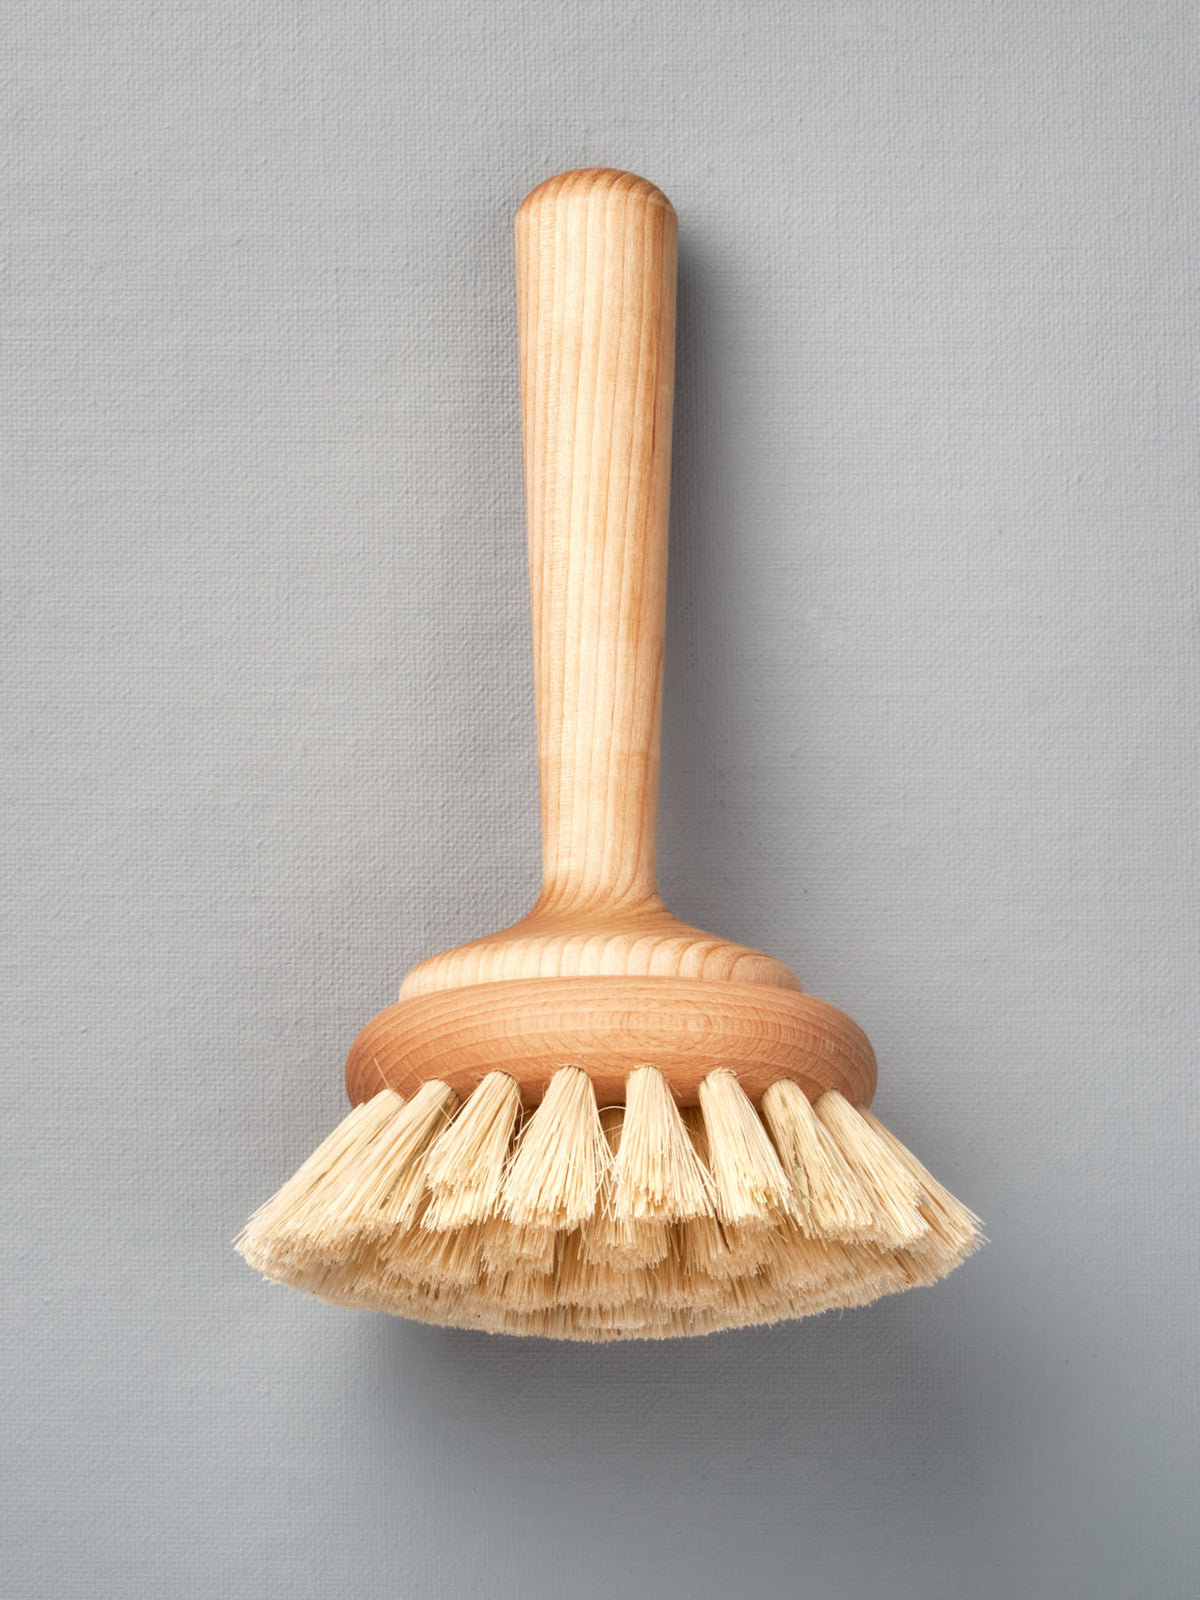 An Iris Hantverk Bathroom Cleaning Brush on a gray background.